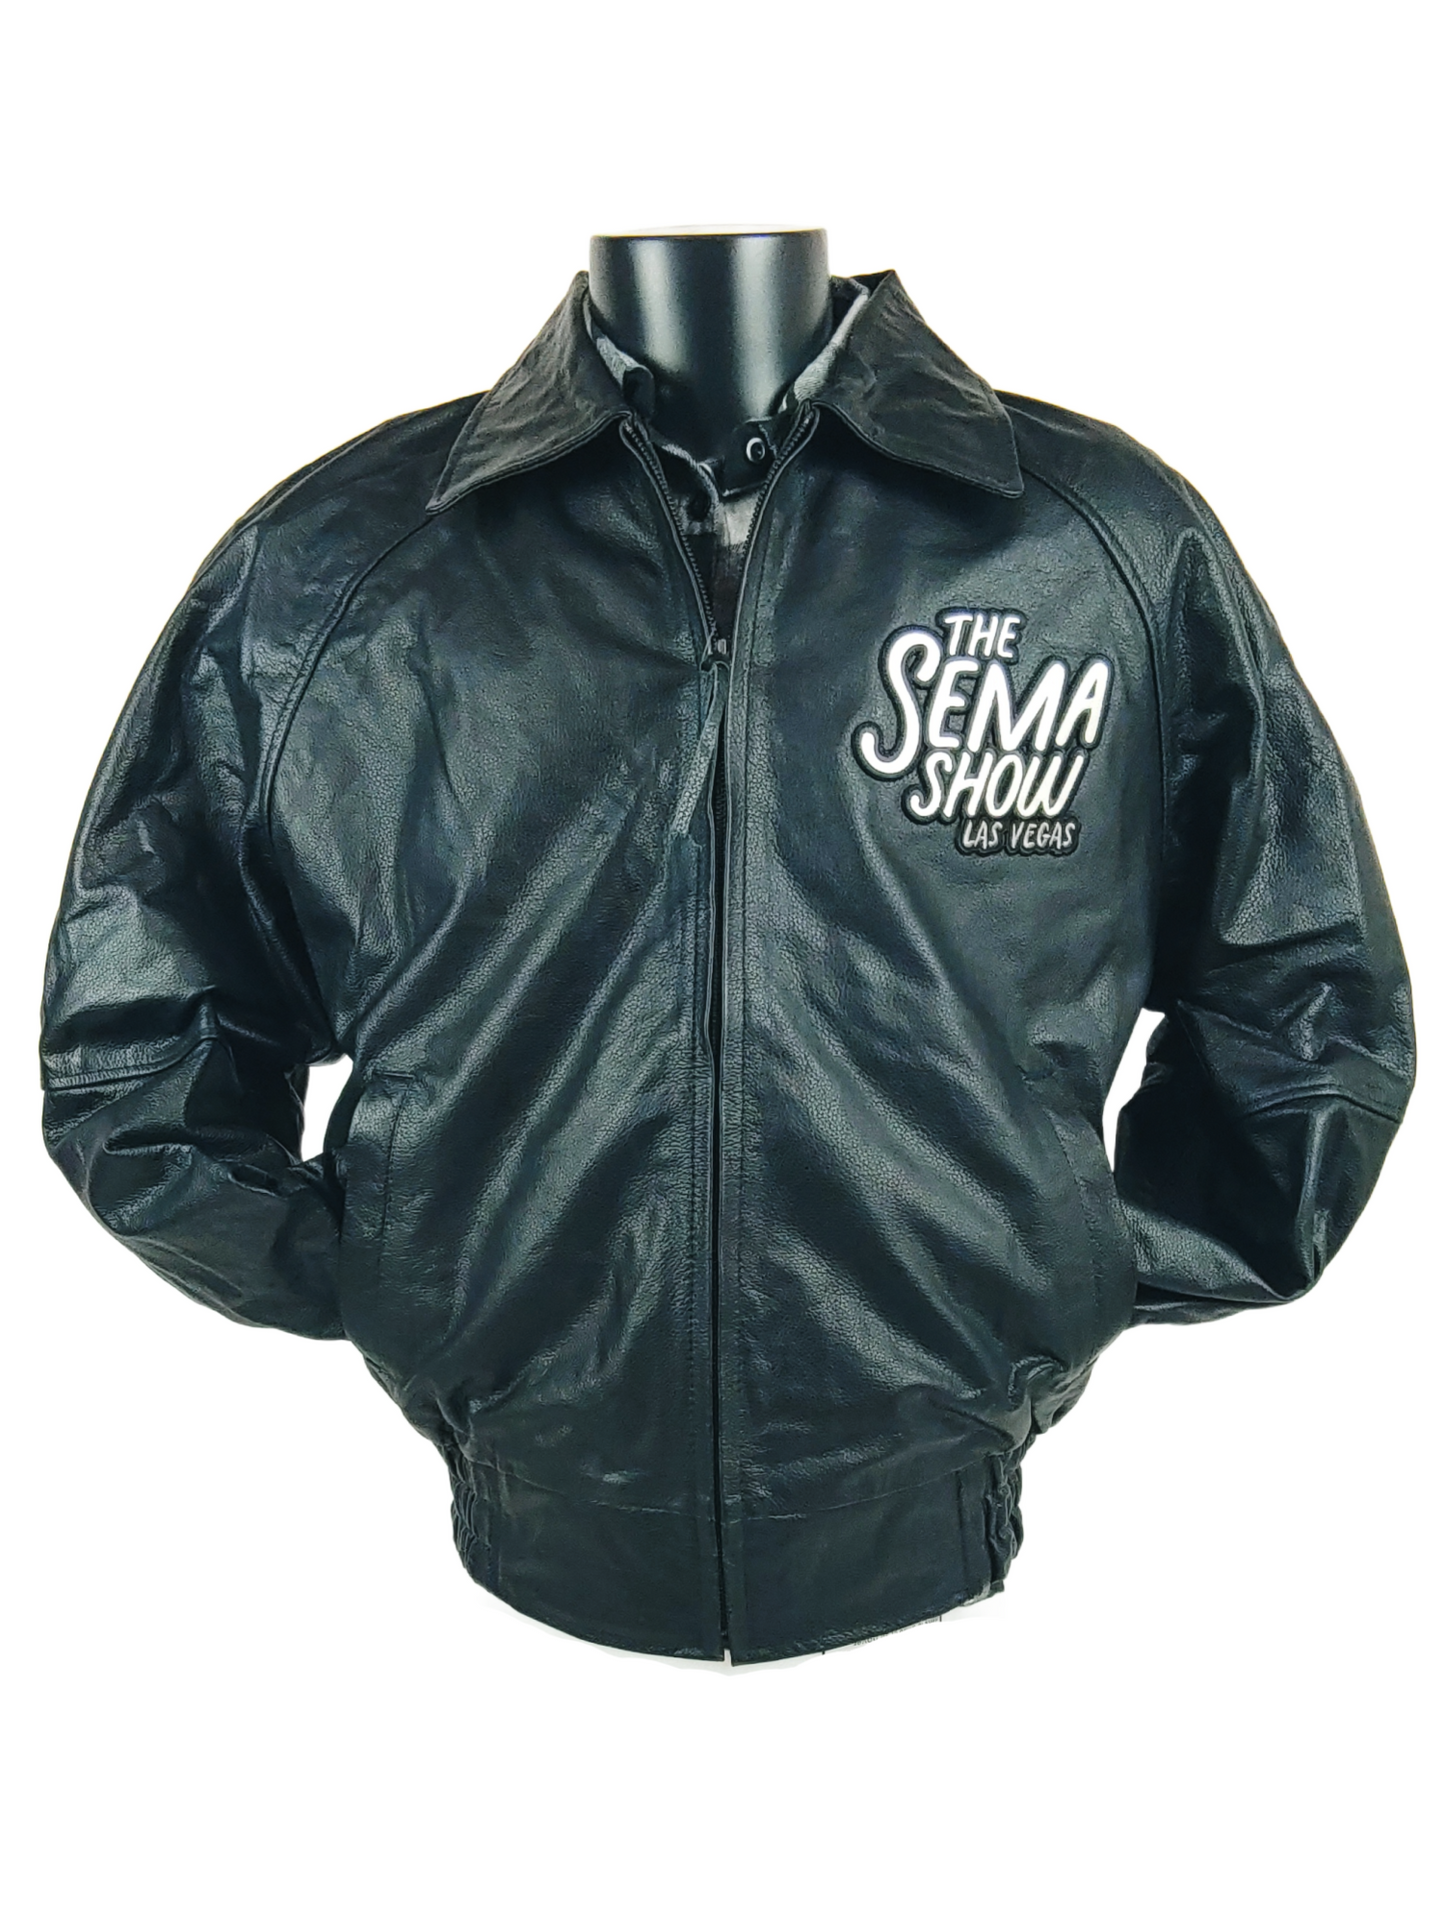 SEMA Show - Black - Burksbay Genuine Leather Jacket